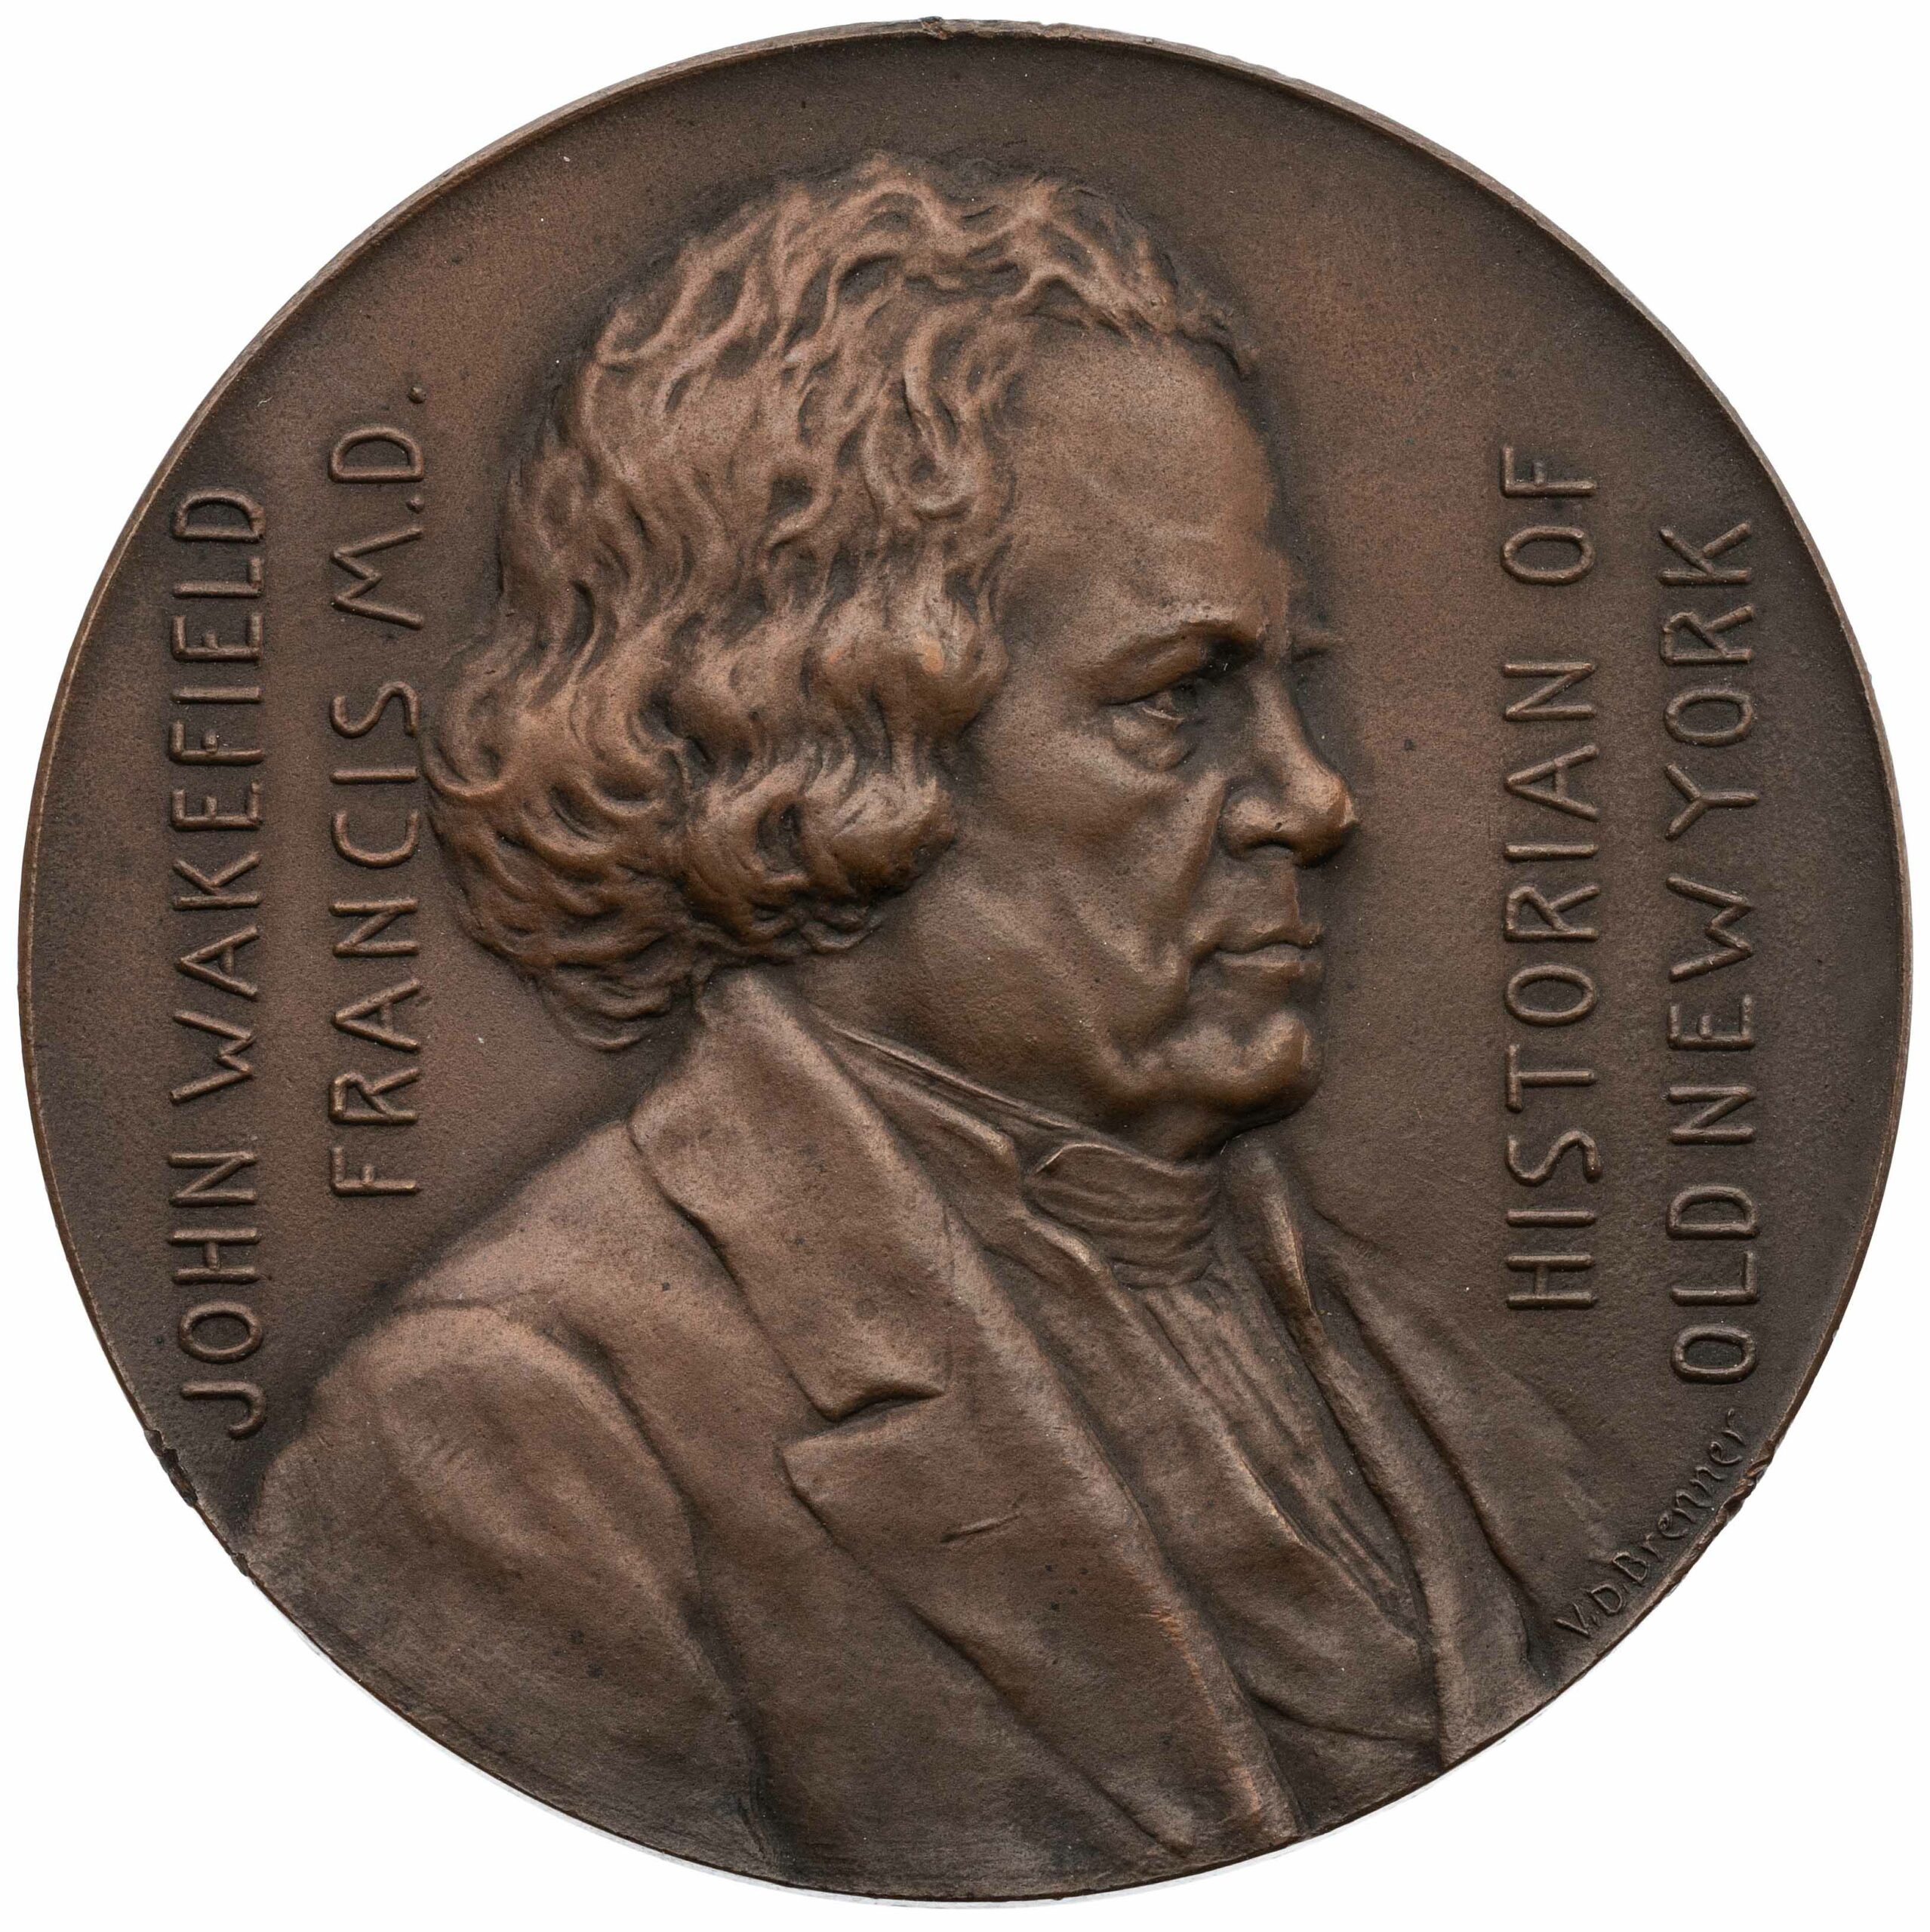 Hahlo-127-131, Dr. John Wakefield Francis Medal